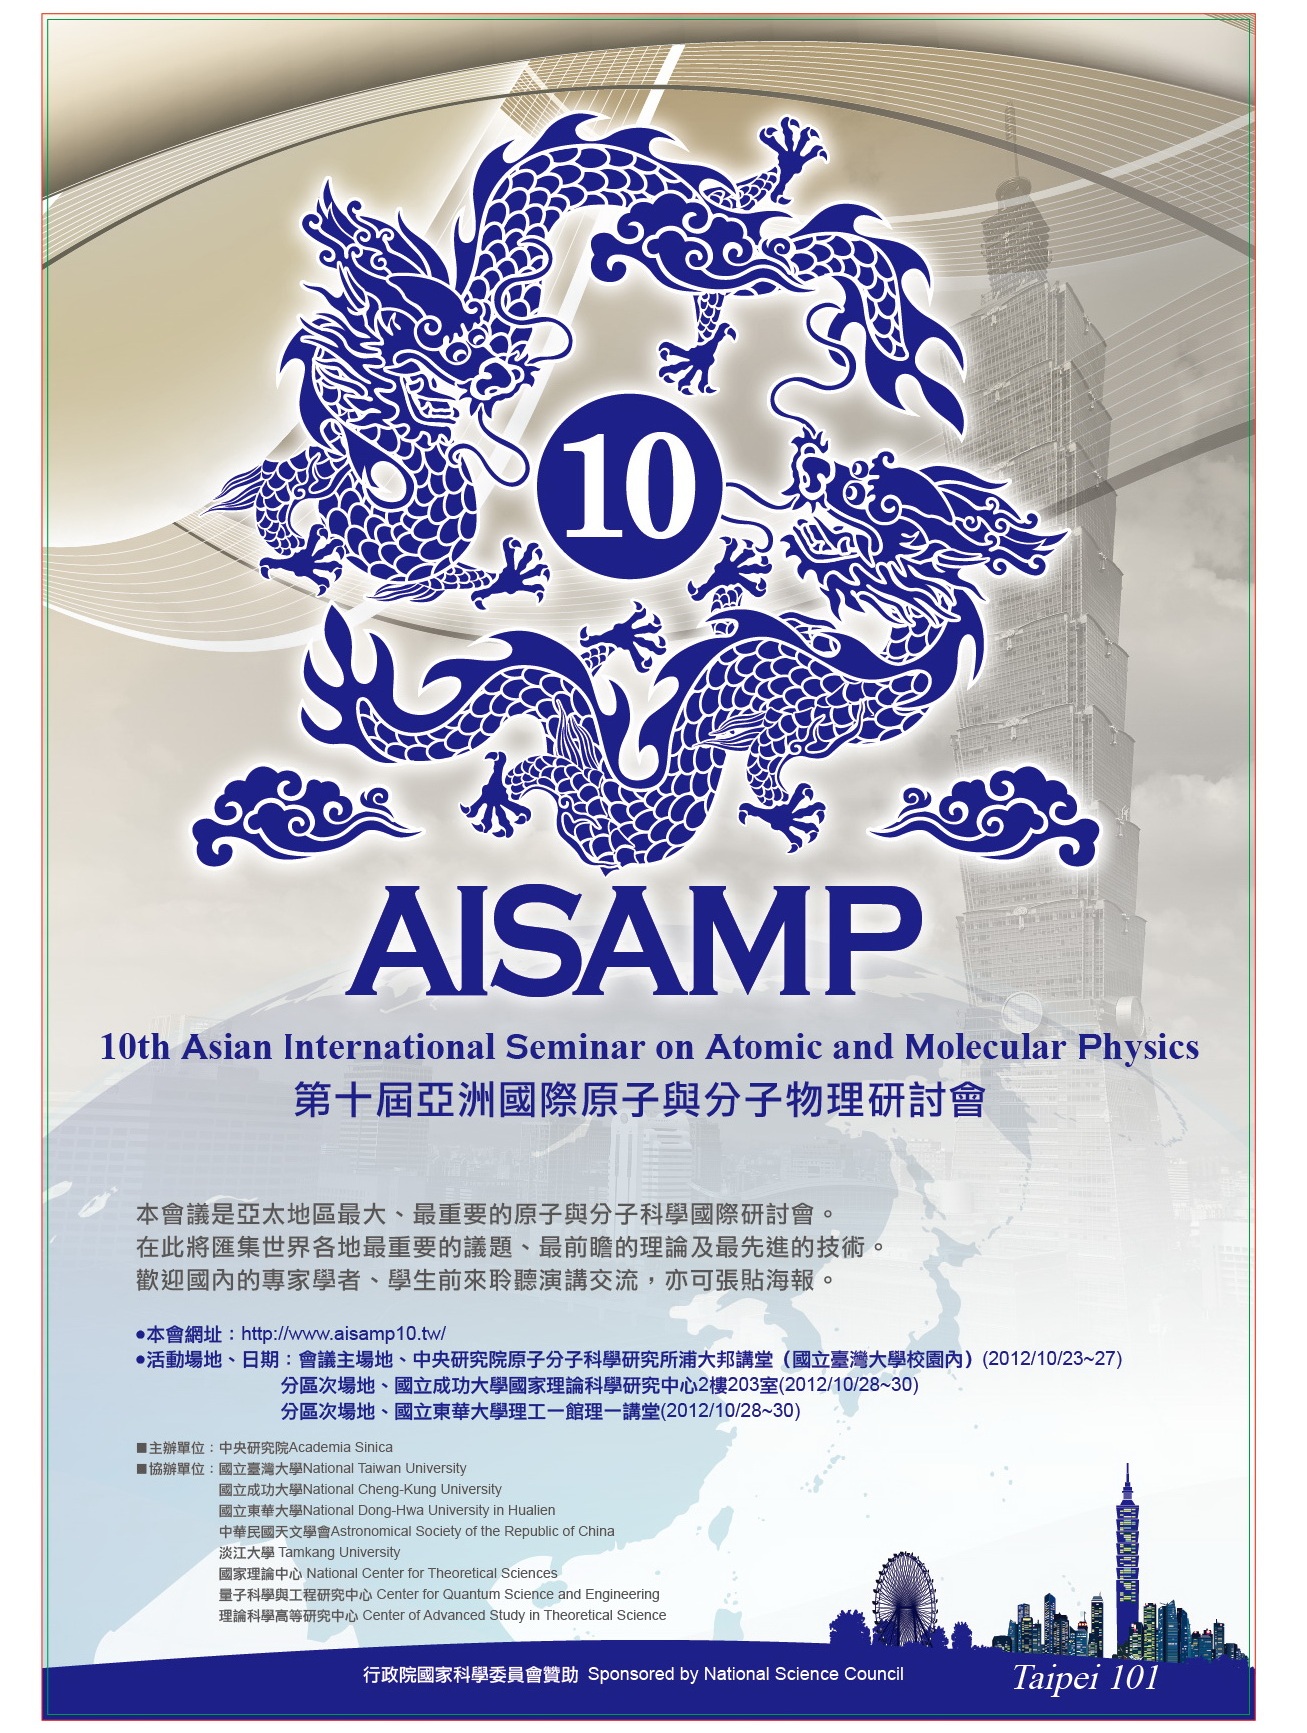 10th Asian International Seminar on Atomic and Molecular Physics (AISAMP 10)